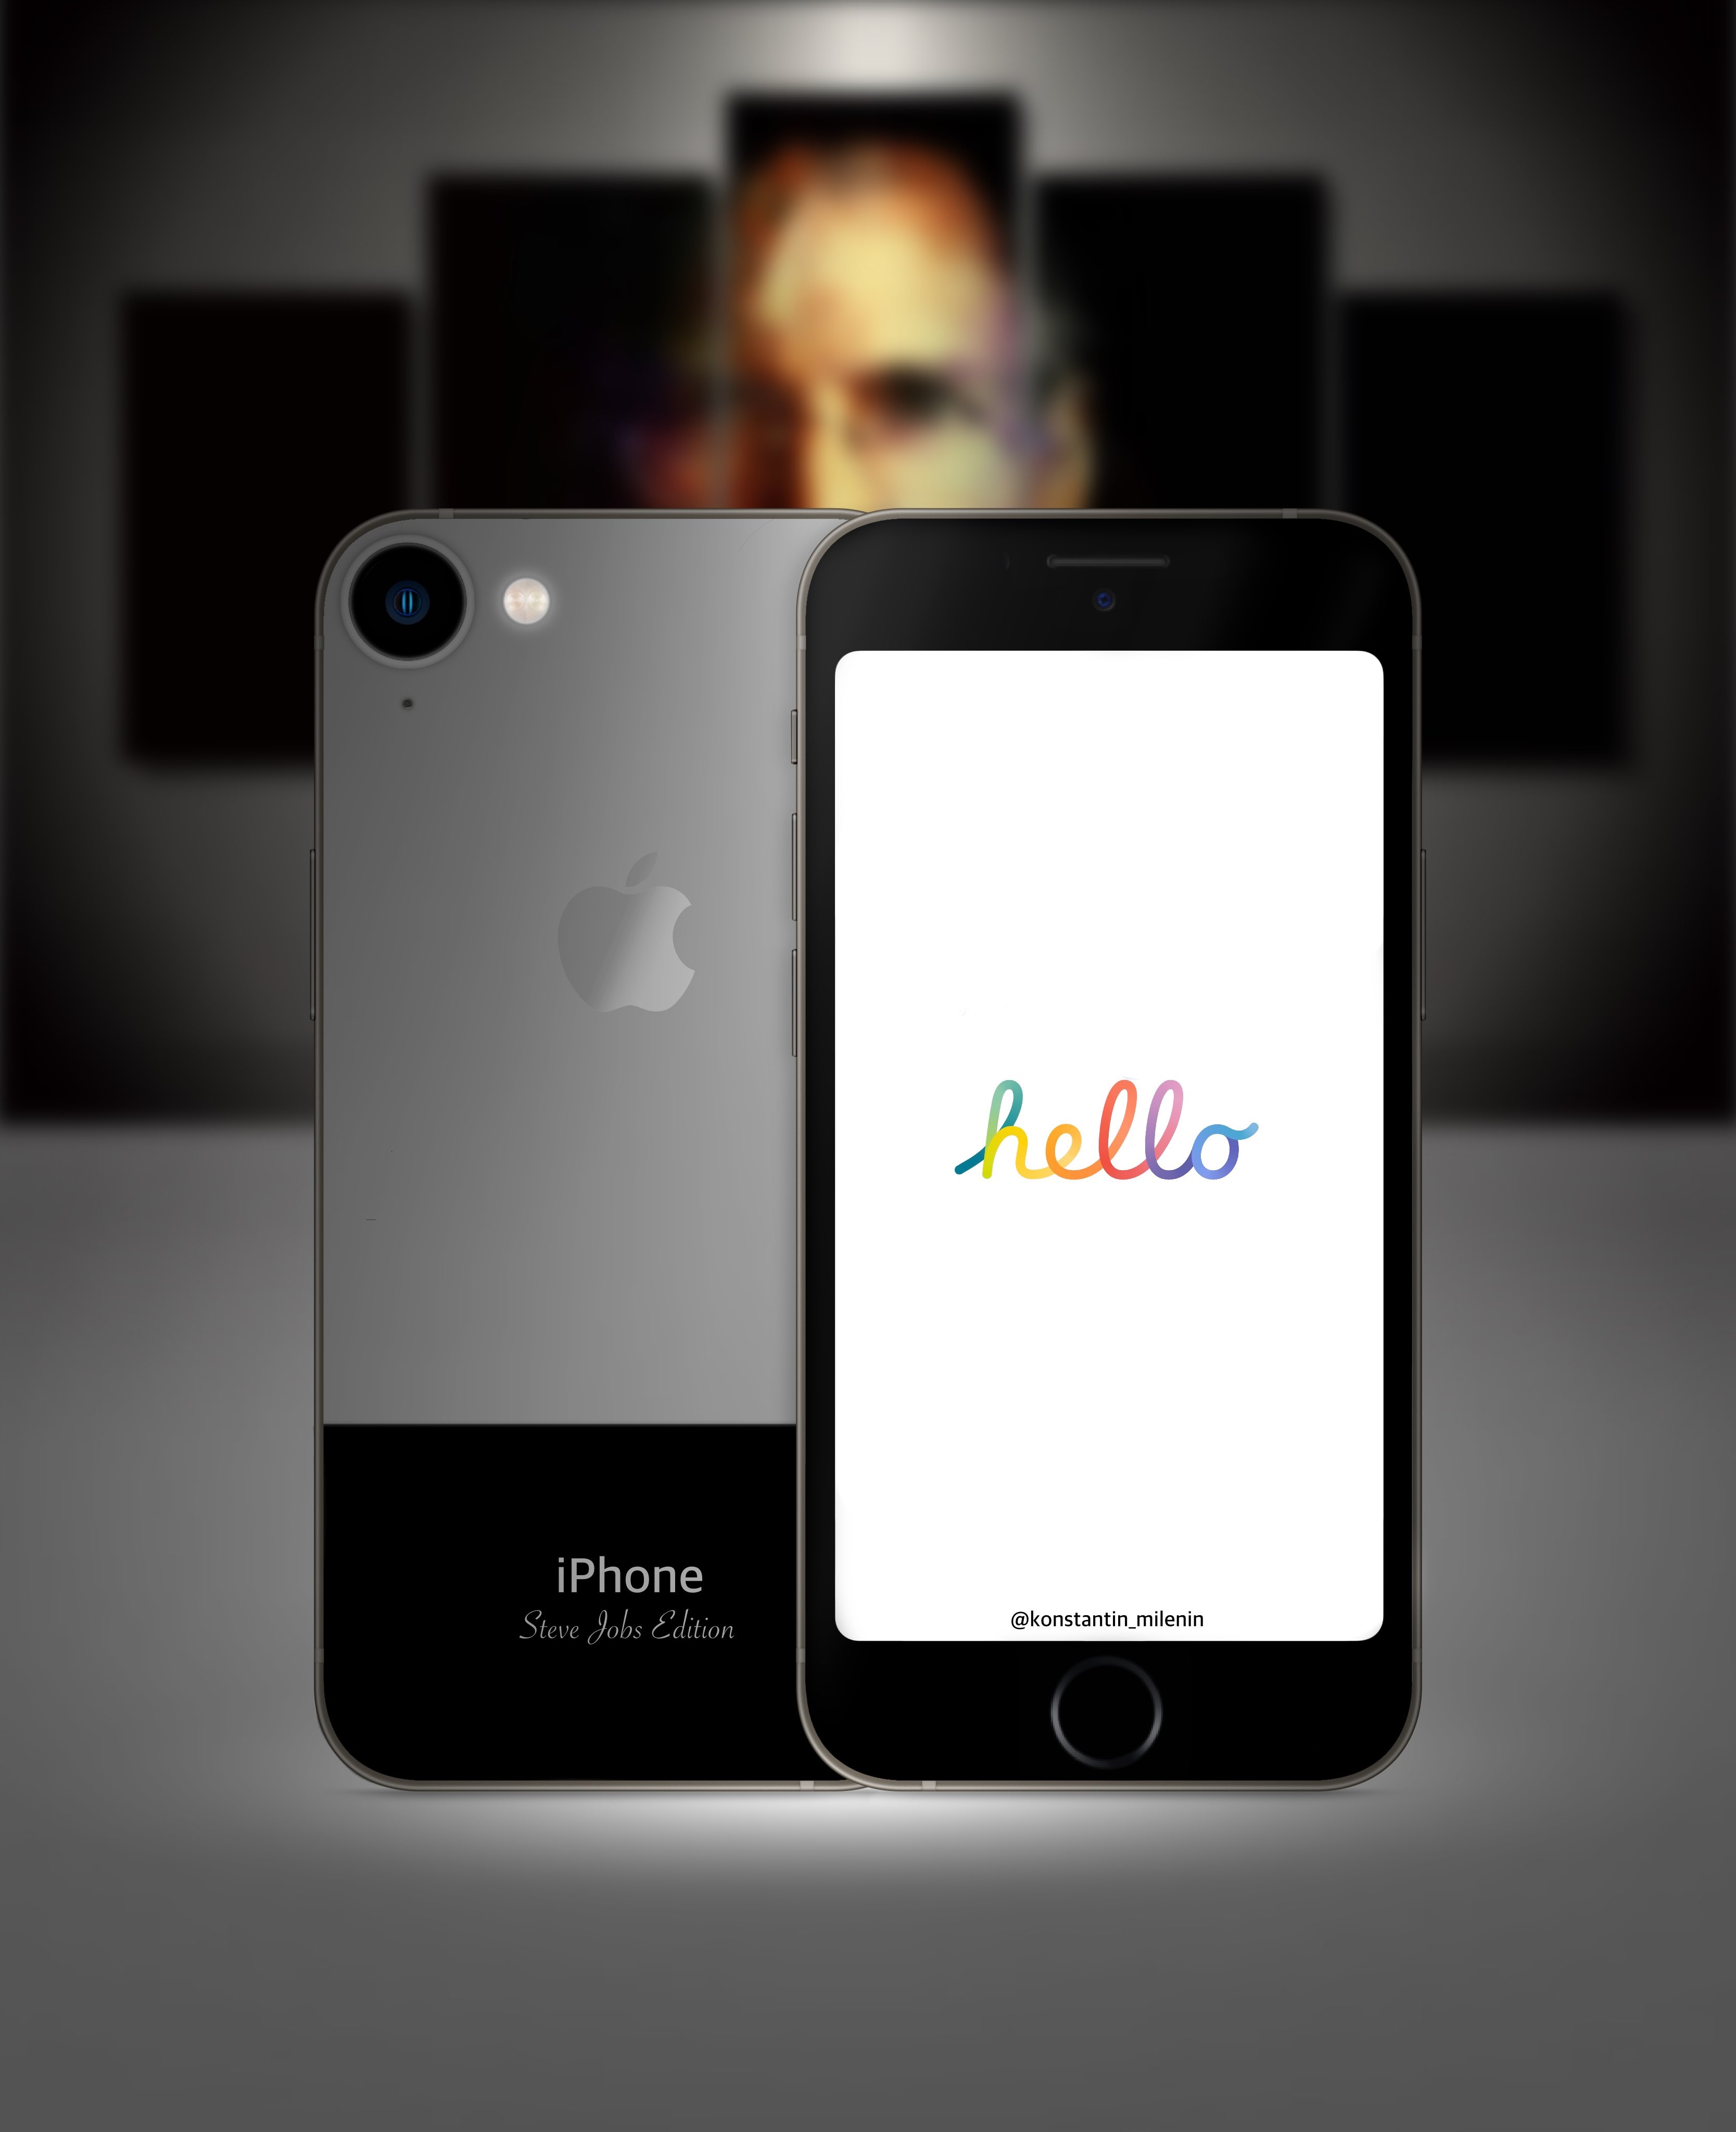 iPhone 4s Steve Jobs Edition, concept